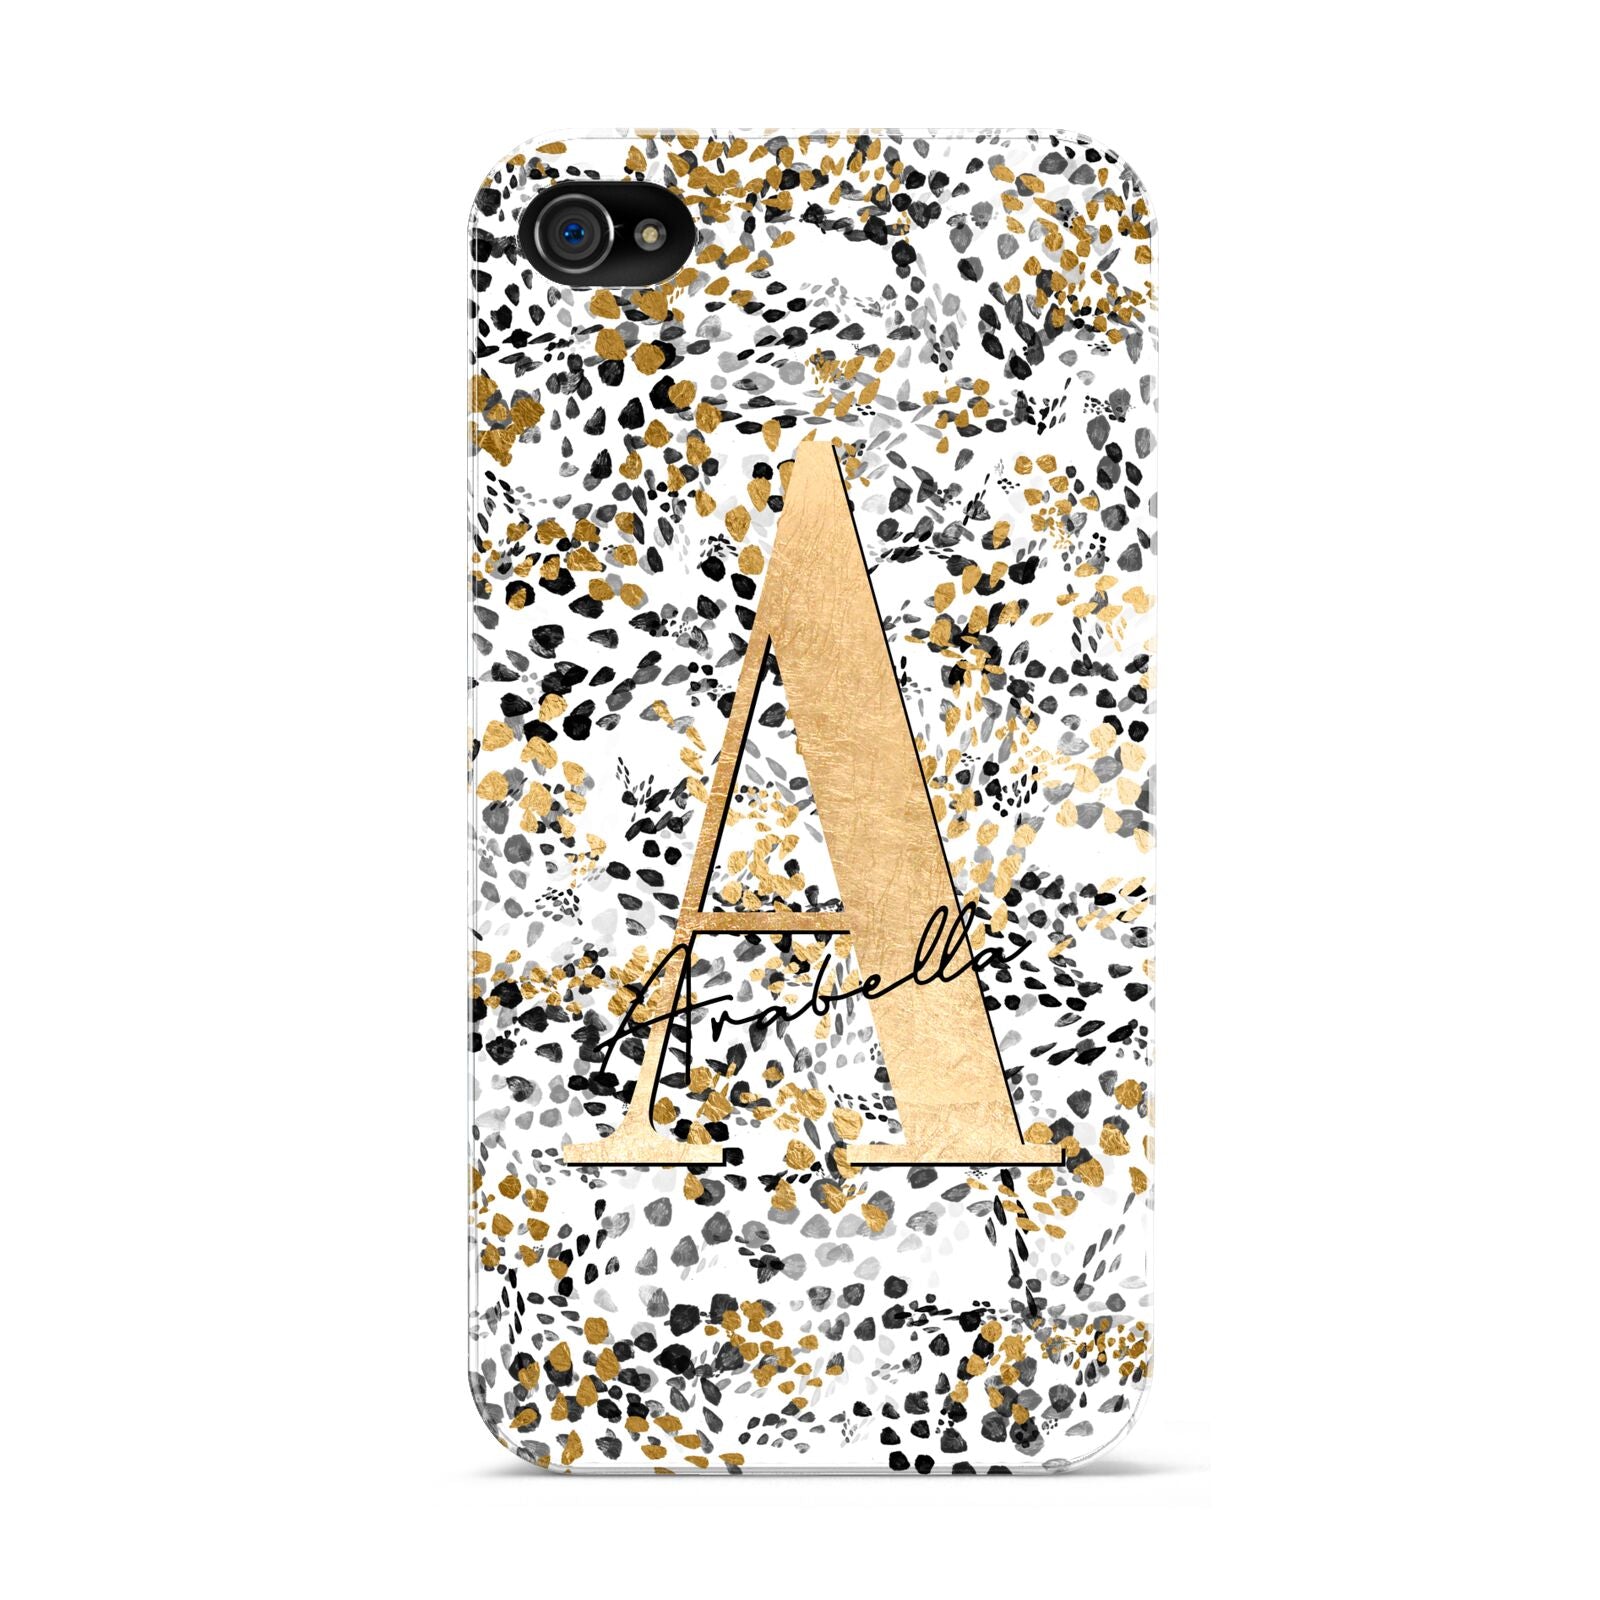 Personalised Gold Black Cheetah Apple iPhone 4s Case